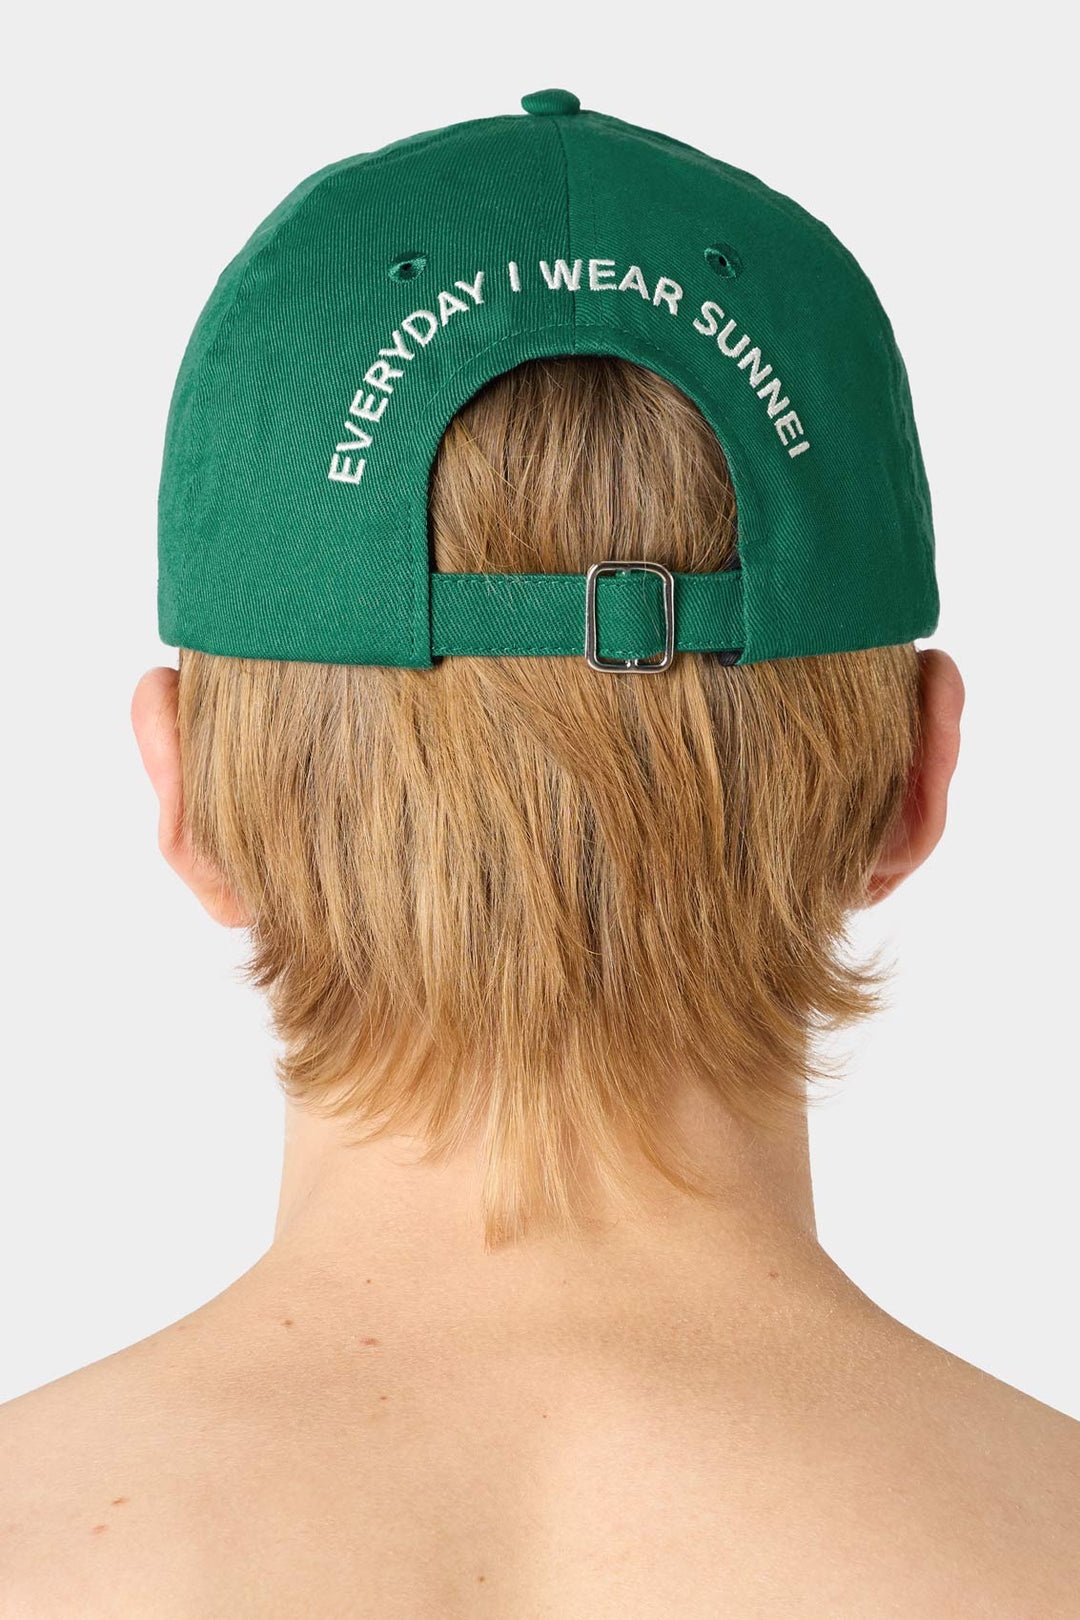 EIWS BASEBALL CAP / emerald green - 3